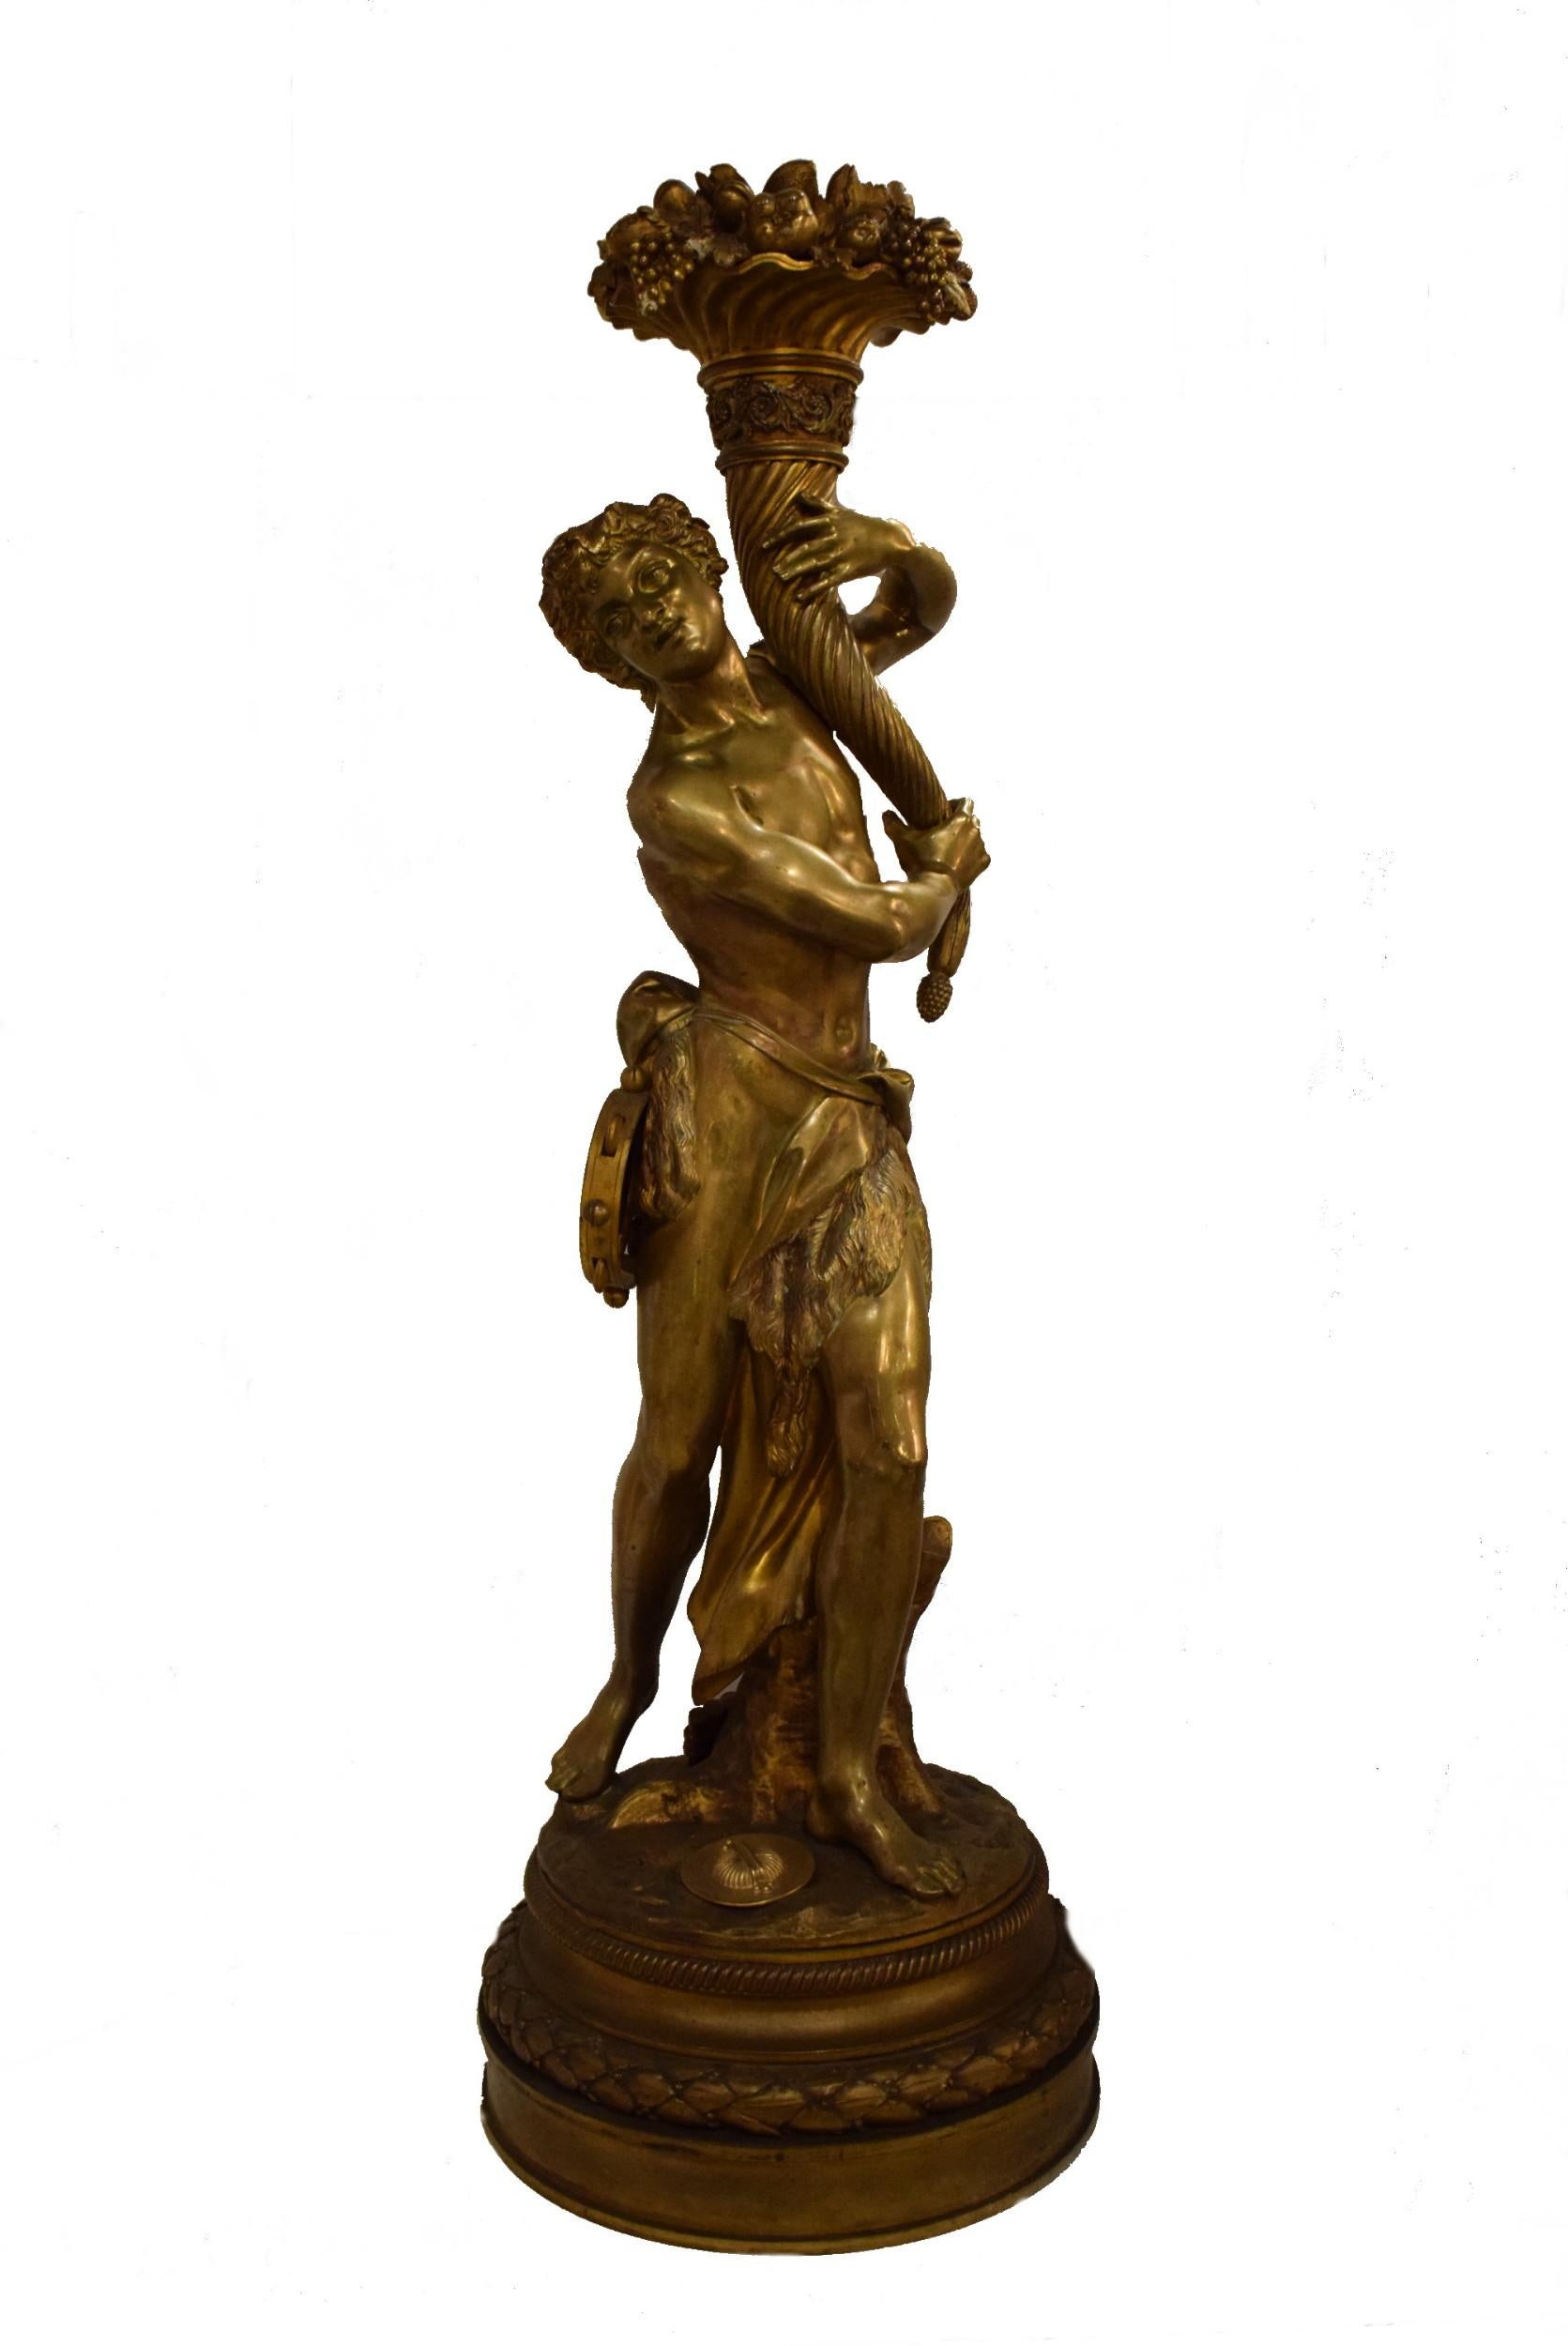 A superb gilt bronze figural lamp base, signed Clodion, 1775. France.
Dimensions: Height 39